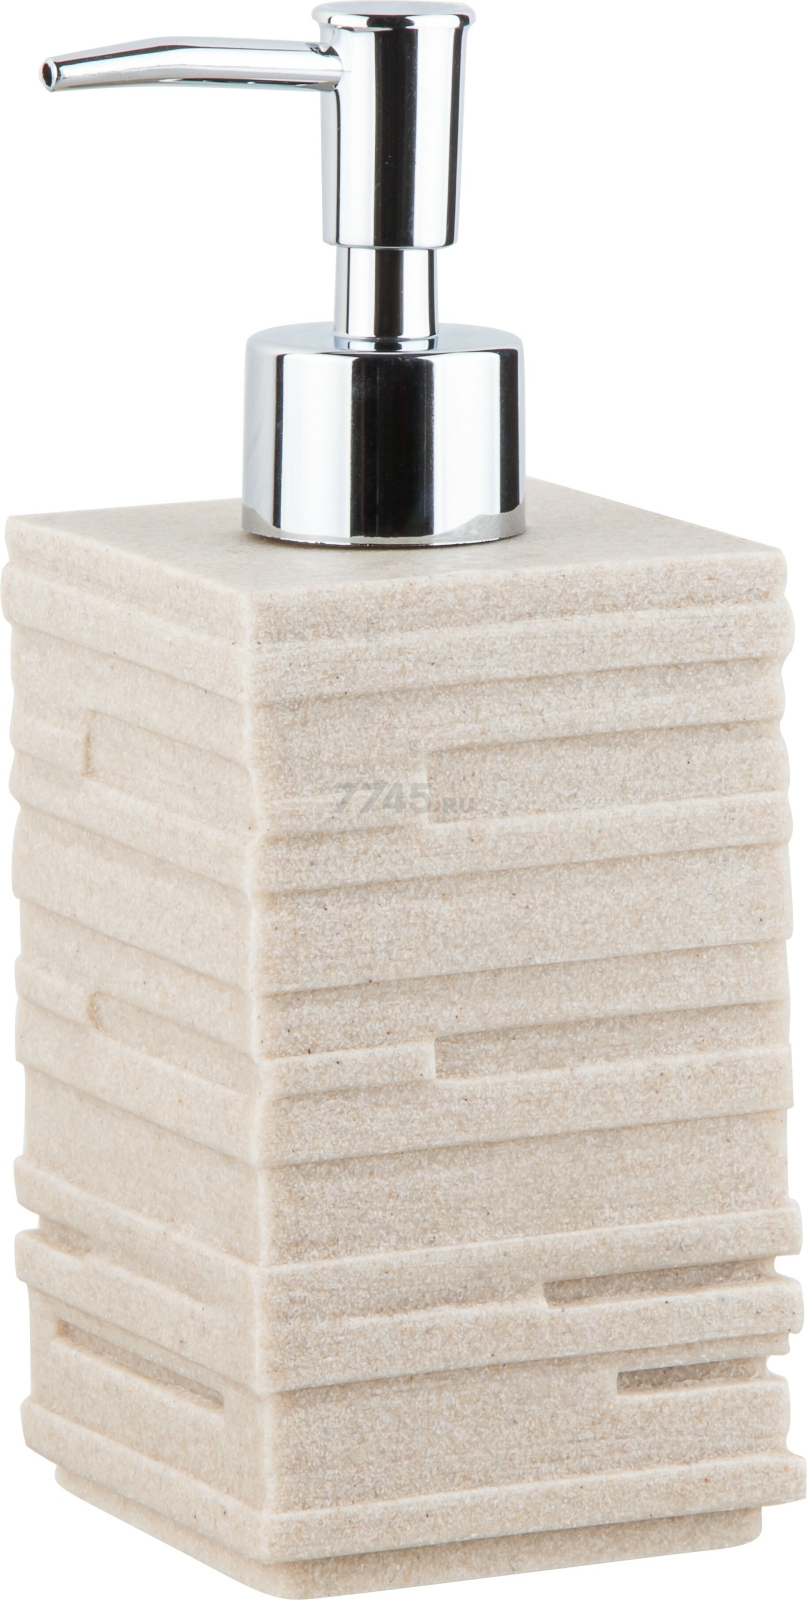 Дозатор для жидкого мыла PERFECTO LINEA Weathered Sand бежевый (35-151100)